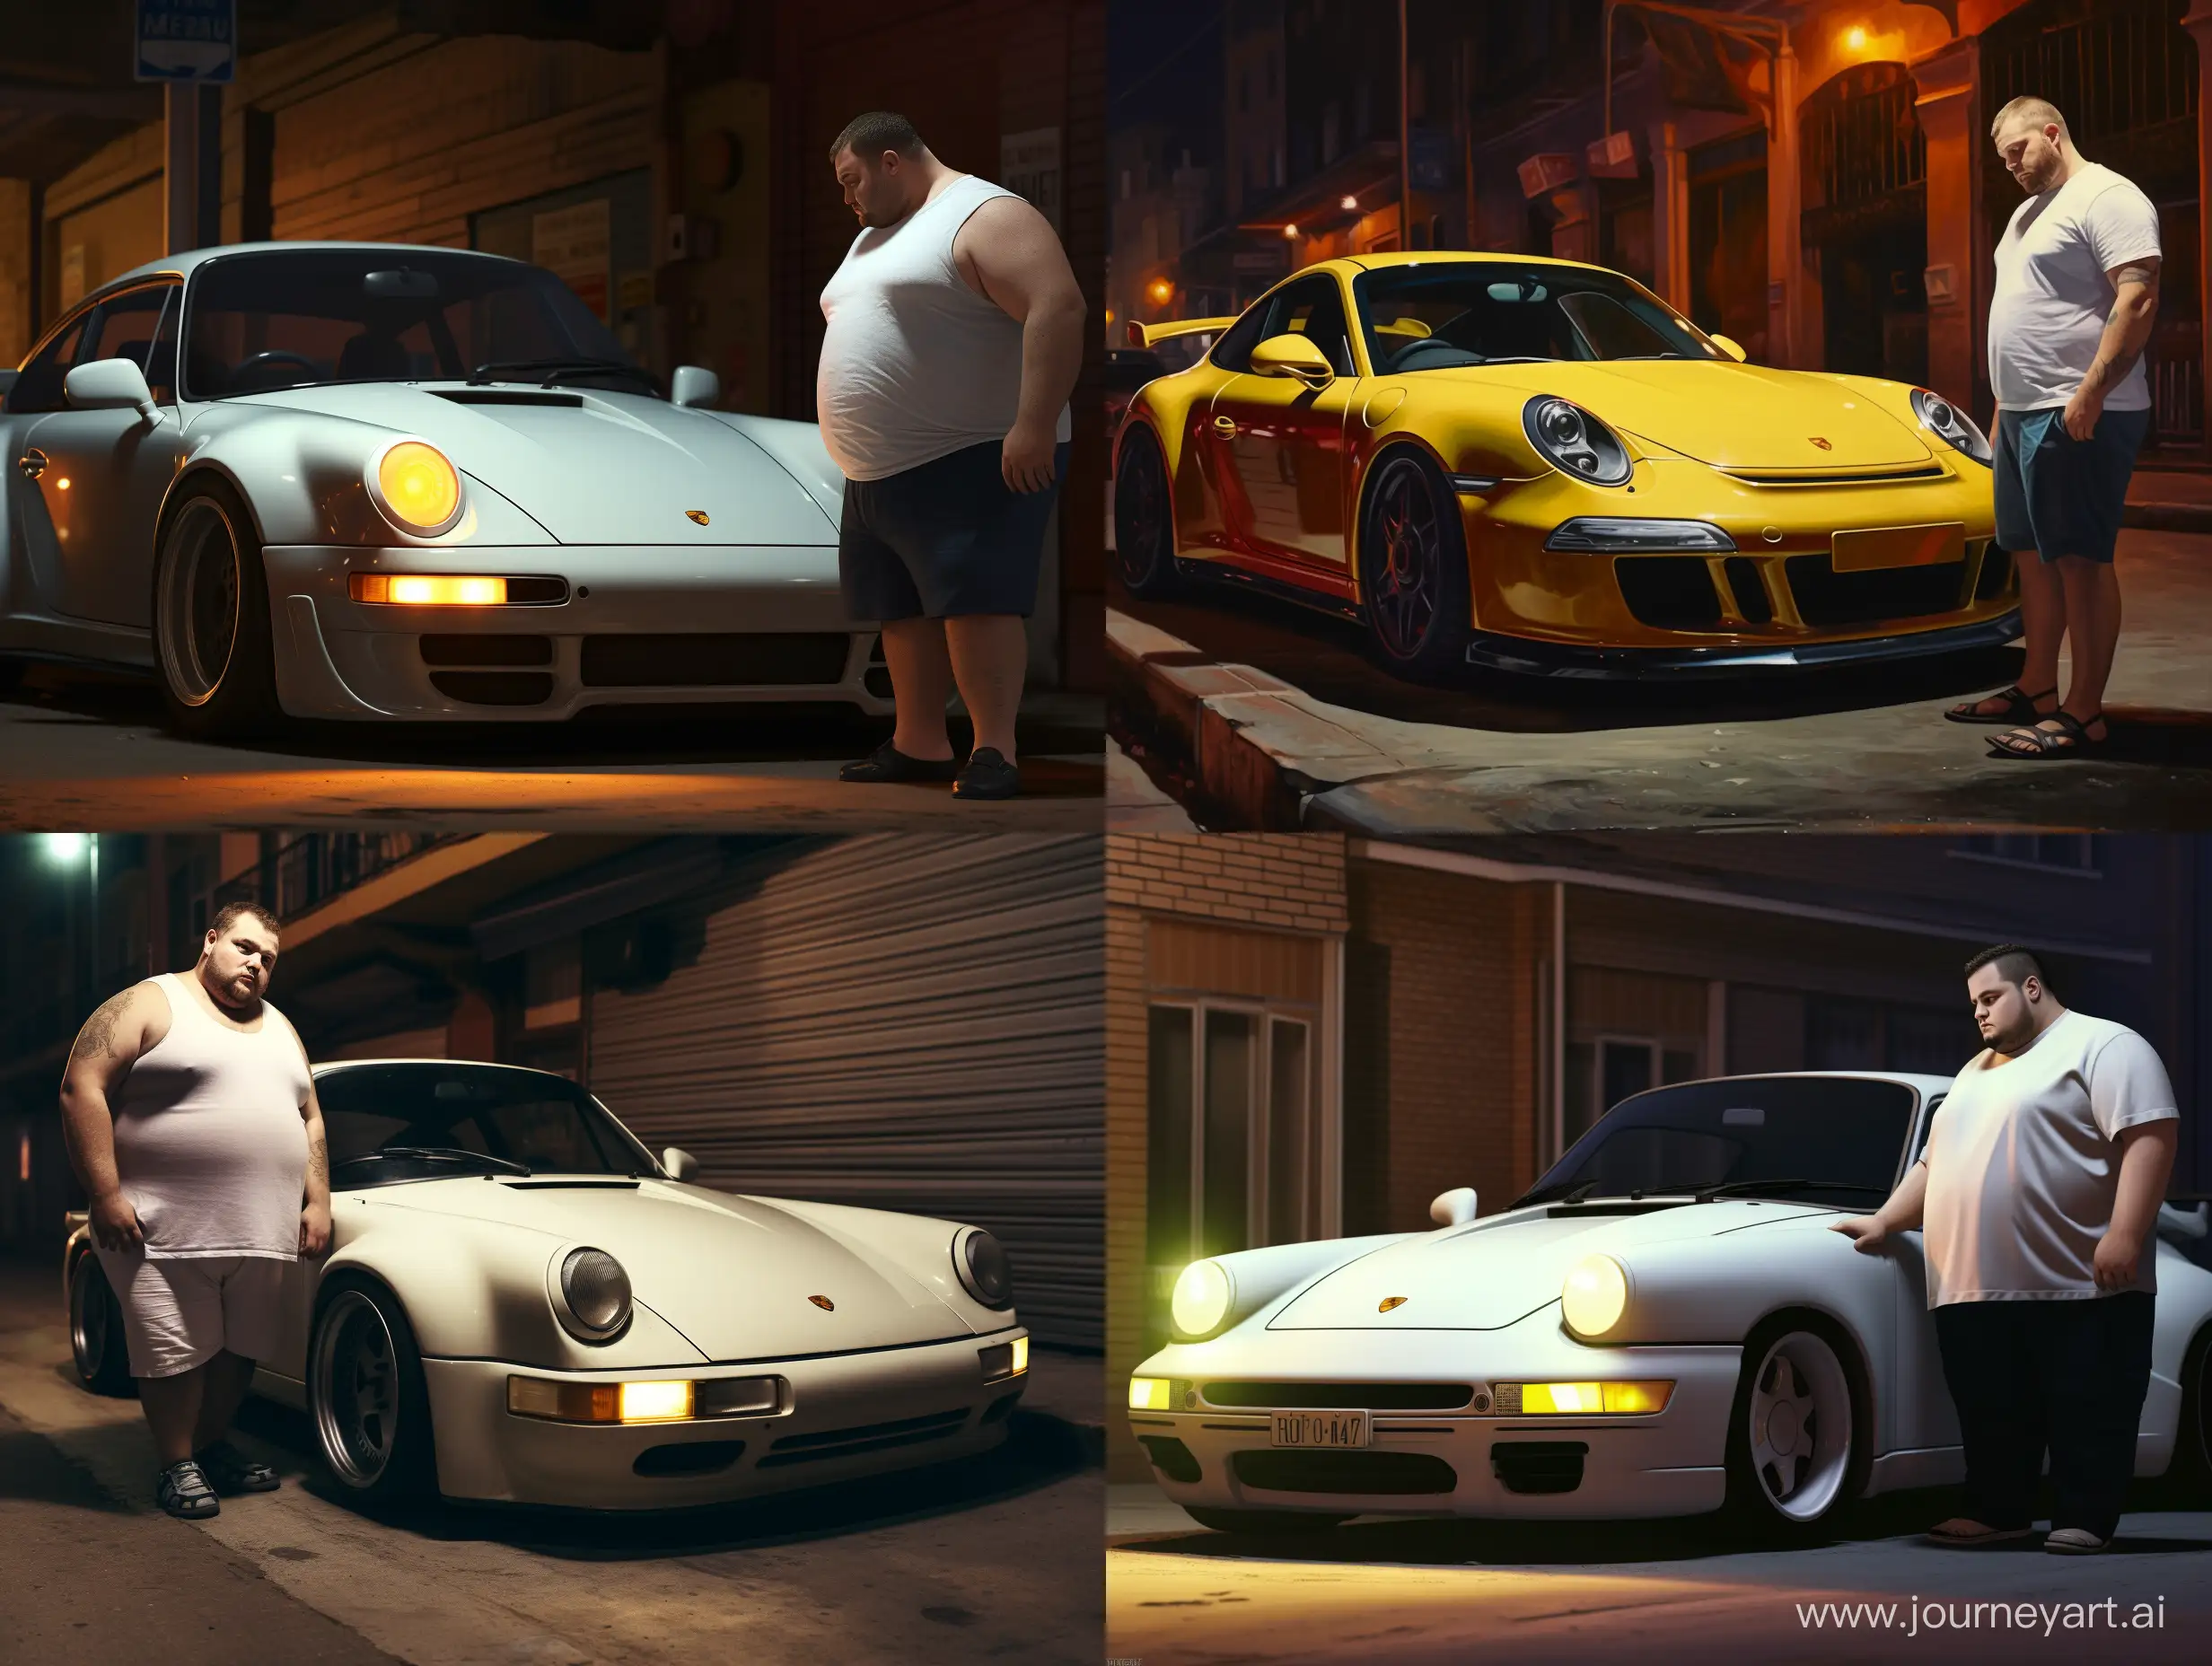 Charming-Scene-Stylish-Young-Man-Admiring-Vintage-White-Porsche-at-Night